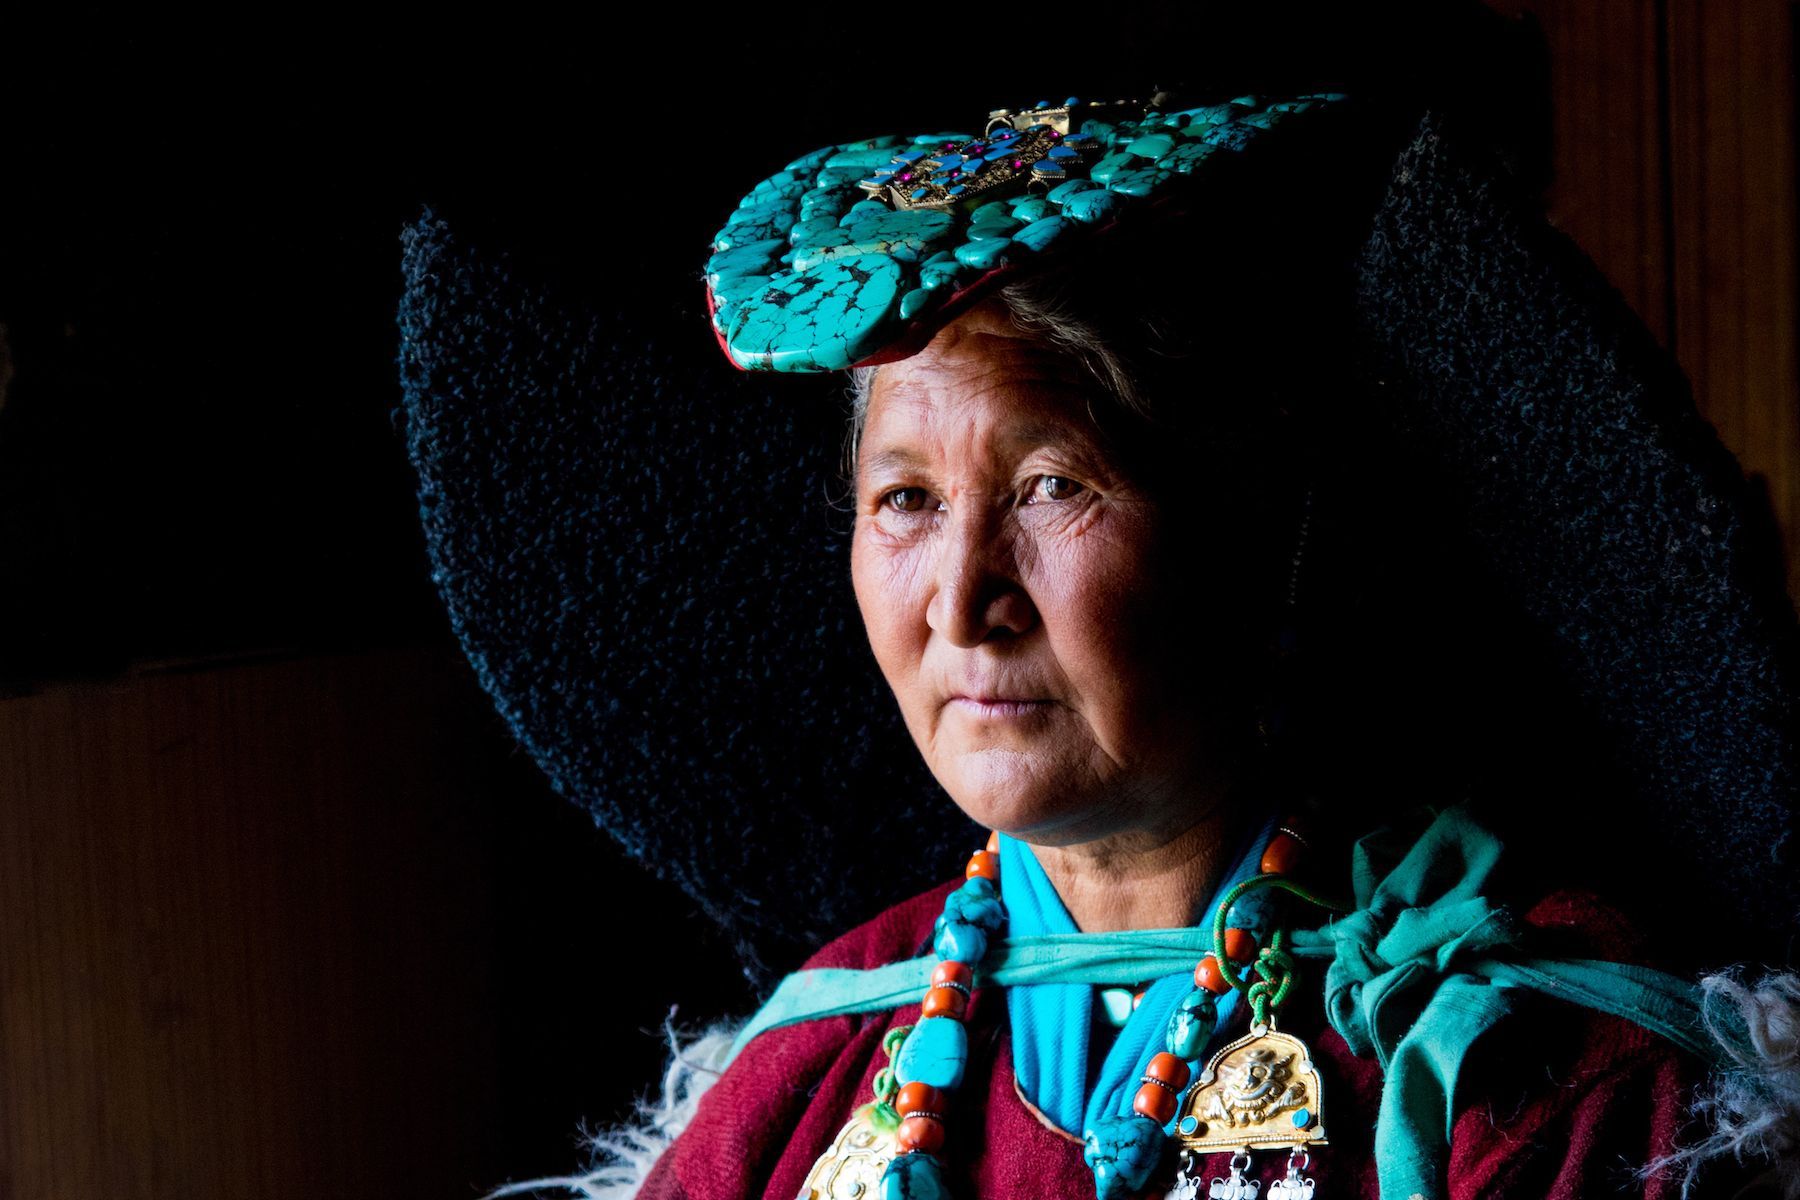 Ladakh Women's Project by Wild Images photo tours